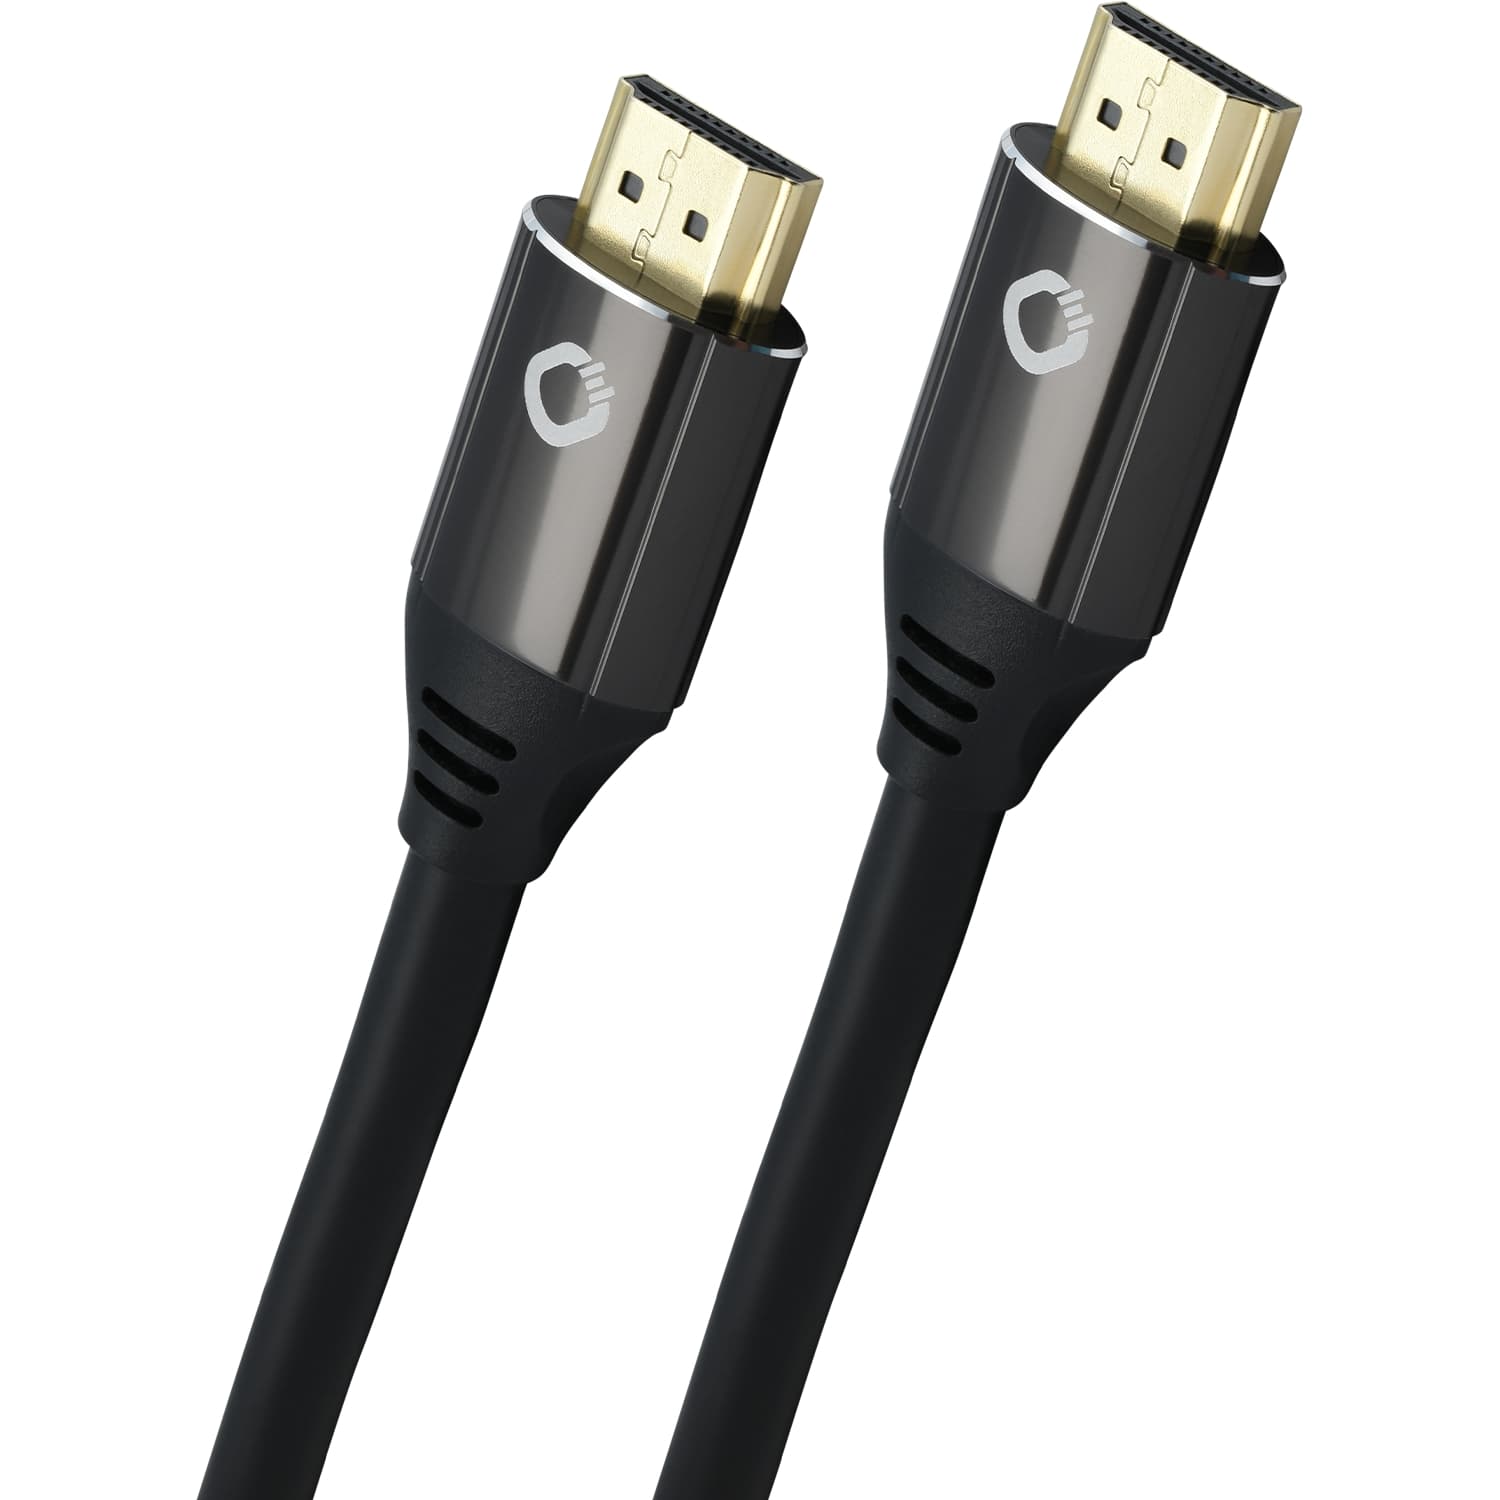 HDMI кабели Oehlbach PERFORMANCE Black Magic MKII, UHS HDMI, 5,0m black, D1C92496 hdmi кабели qed qe6036 performance optical ultra hdmi 10m